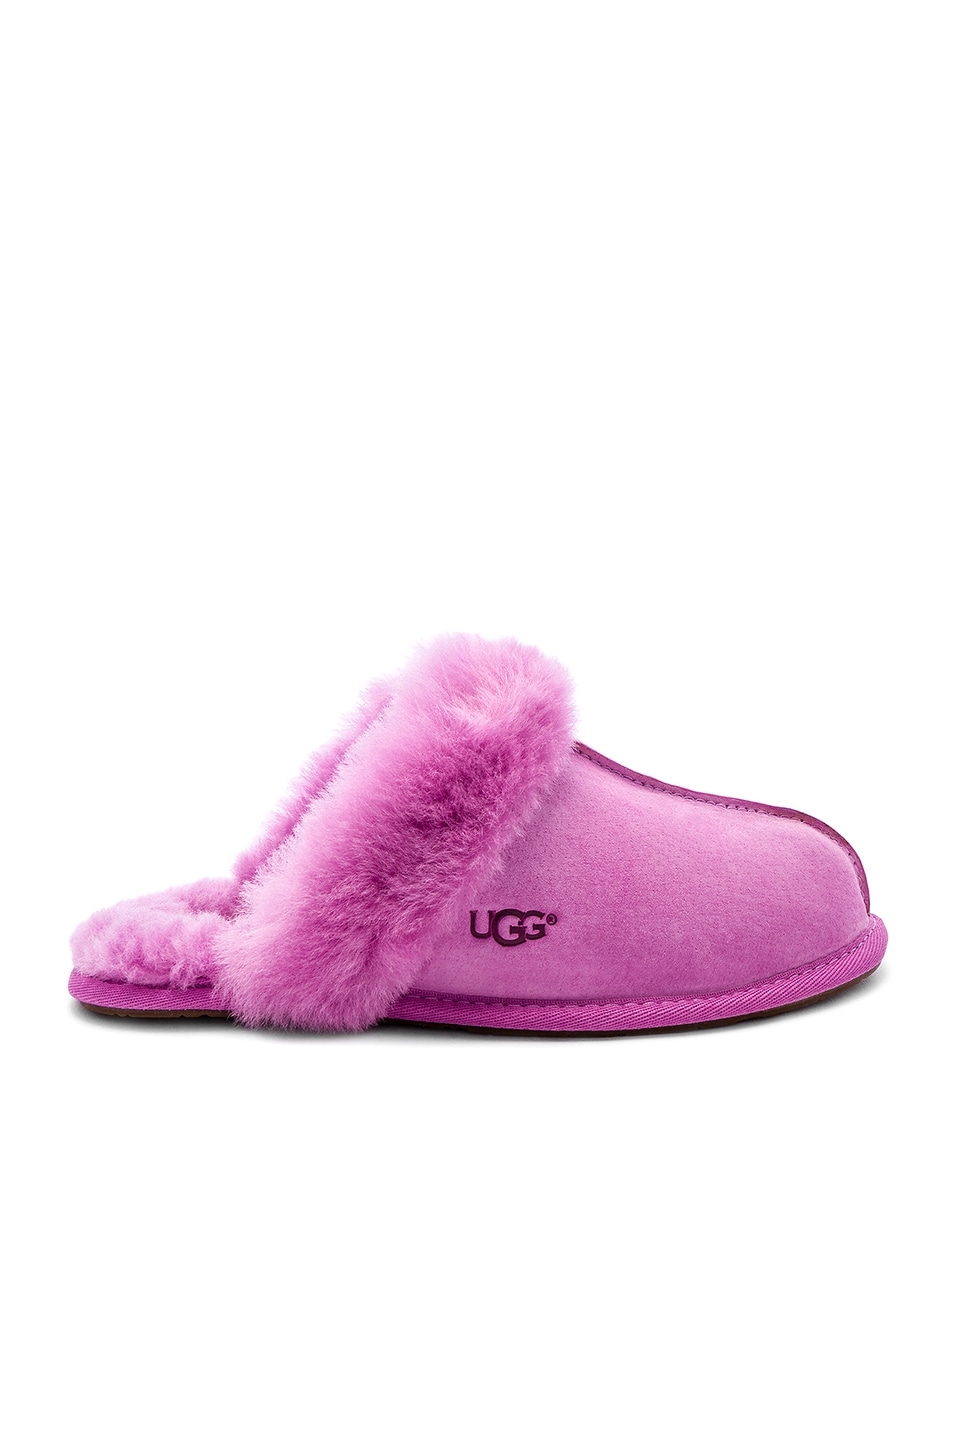 bodacious ugg slippers